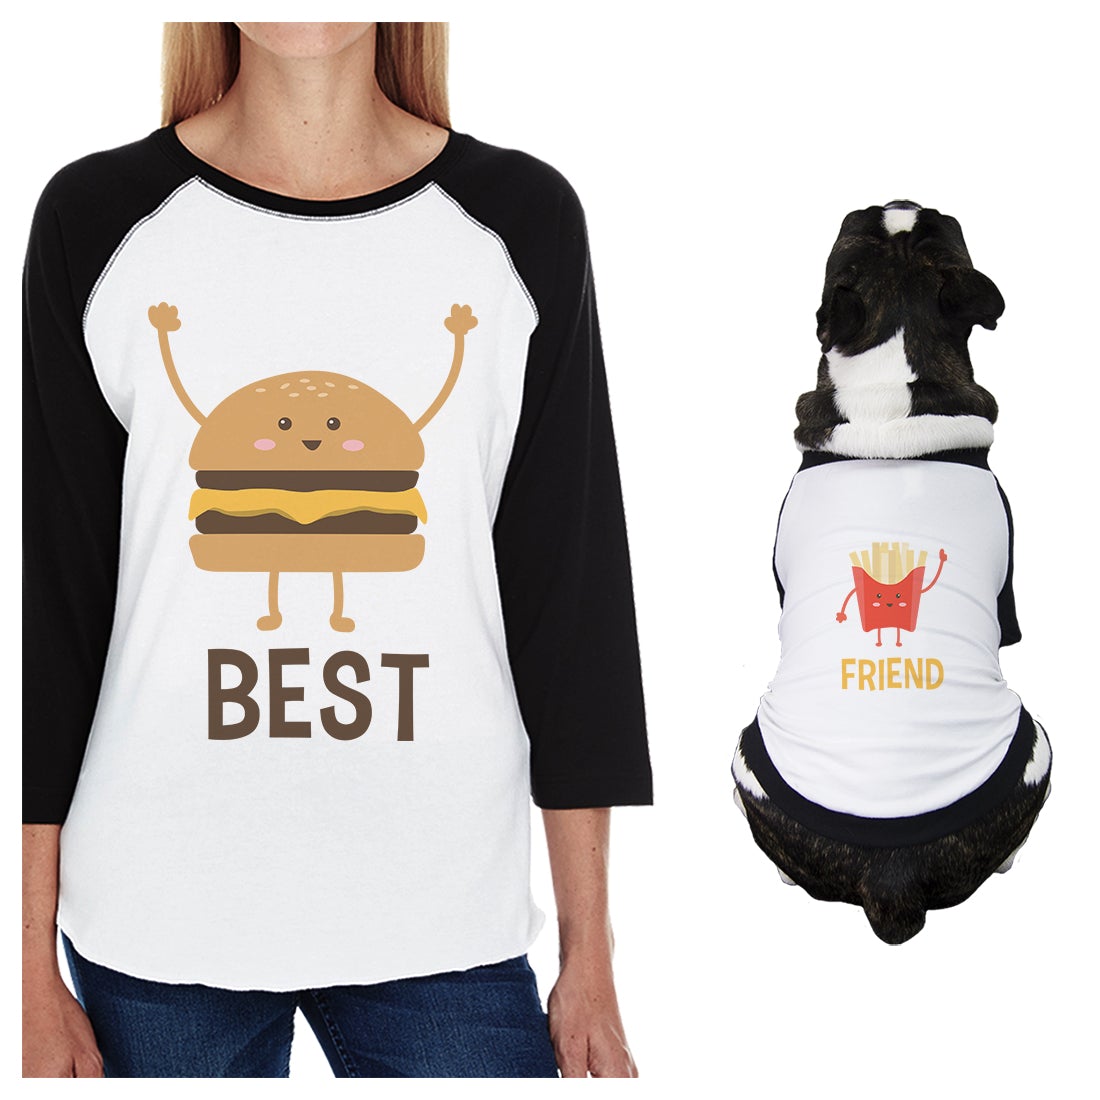 Hamburger And Fries Small Dog and Mom Matching Outfits Raglan Tees Black and White